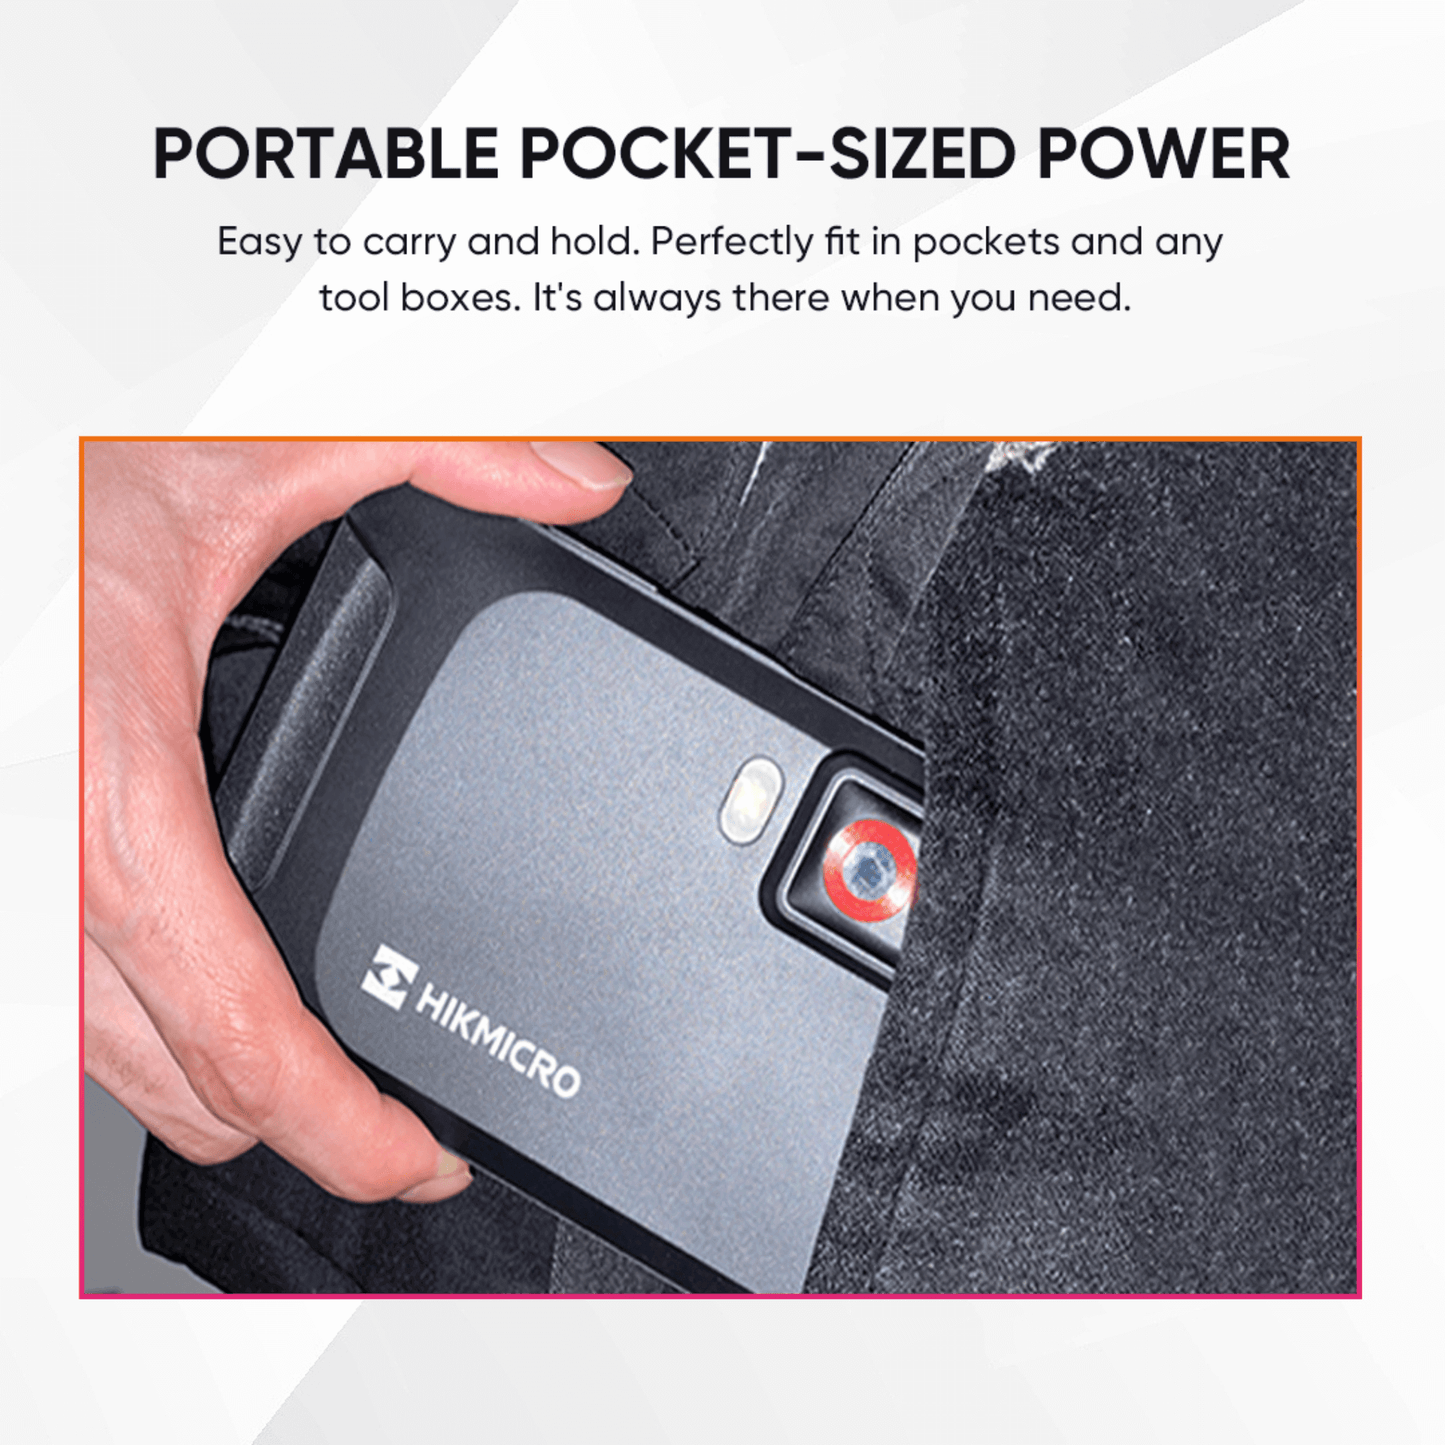 HikMicro Pocket2 Handheld Thermal Imager Portable Pocket Sized Power